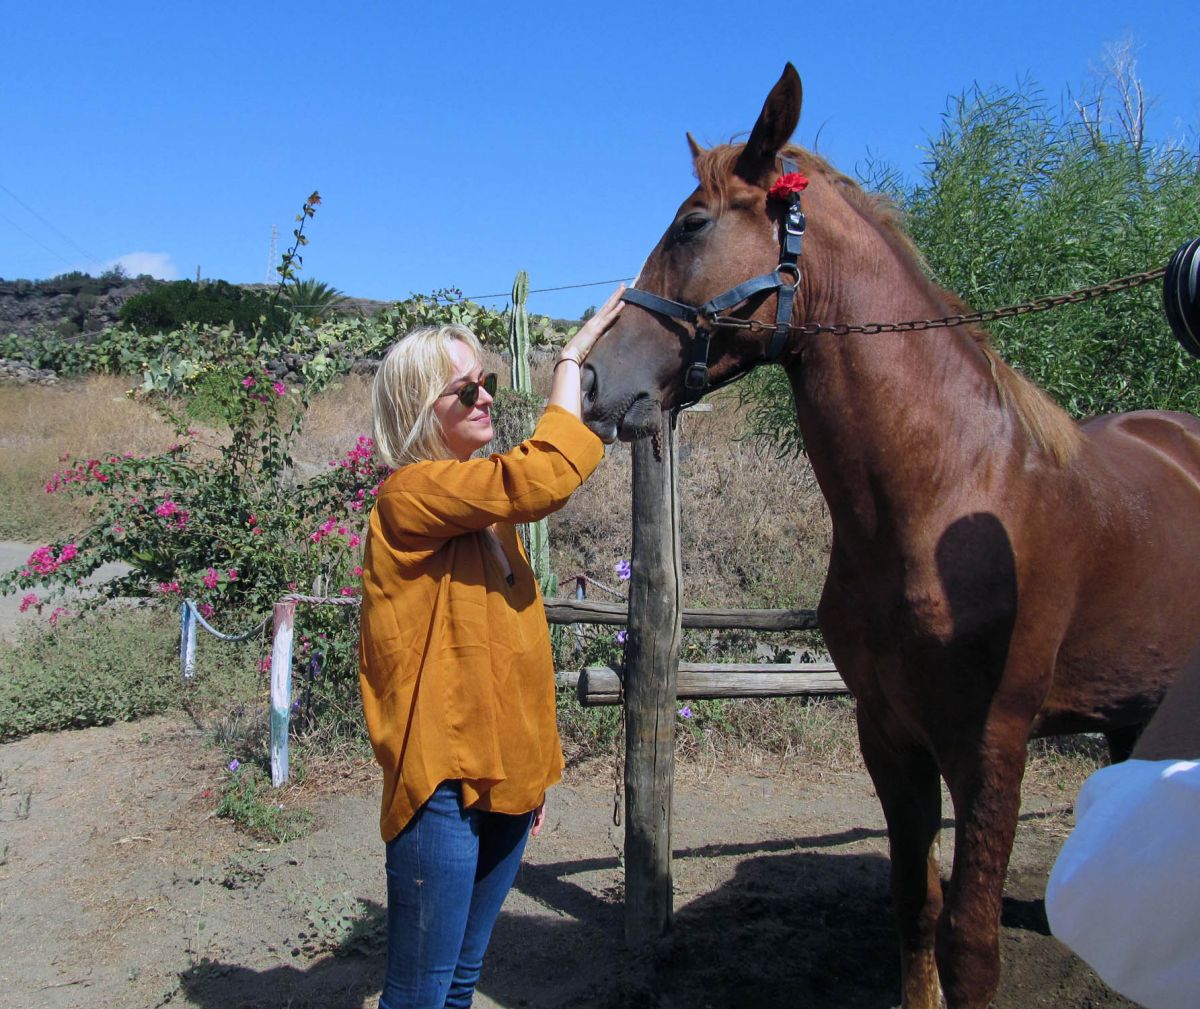 Dakota Johnson Equestrian Center Pantelleria Italy